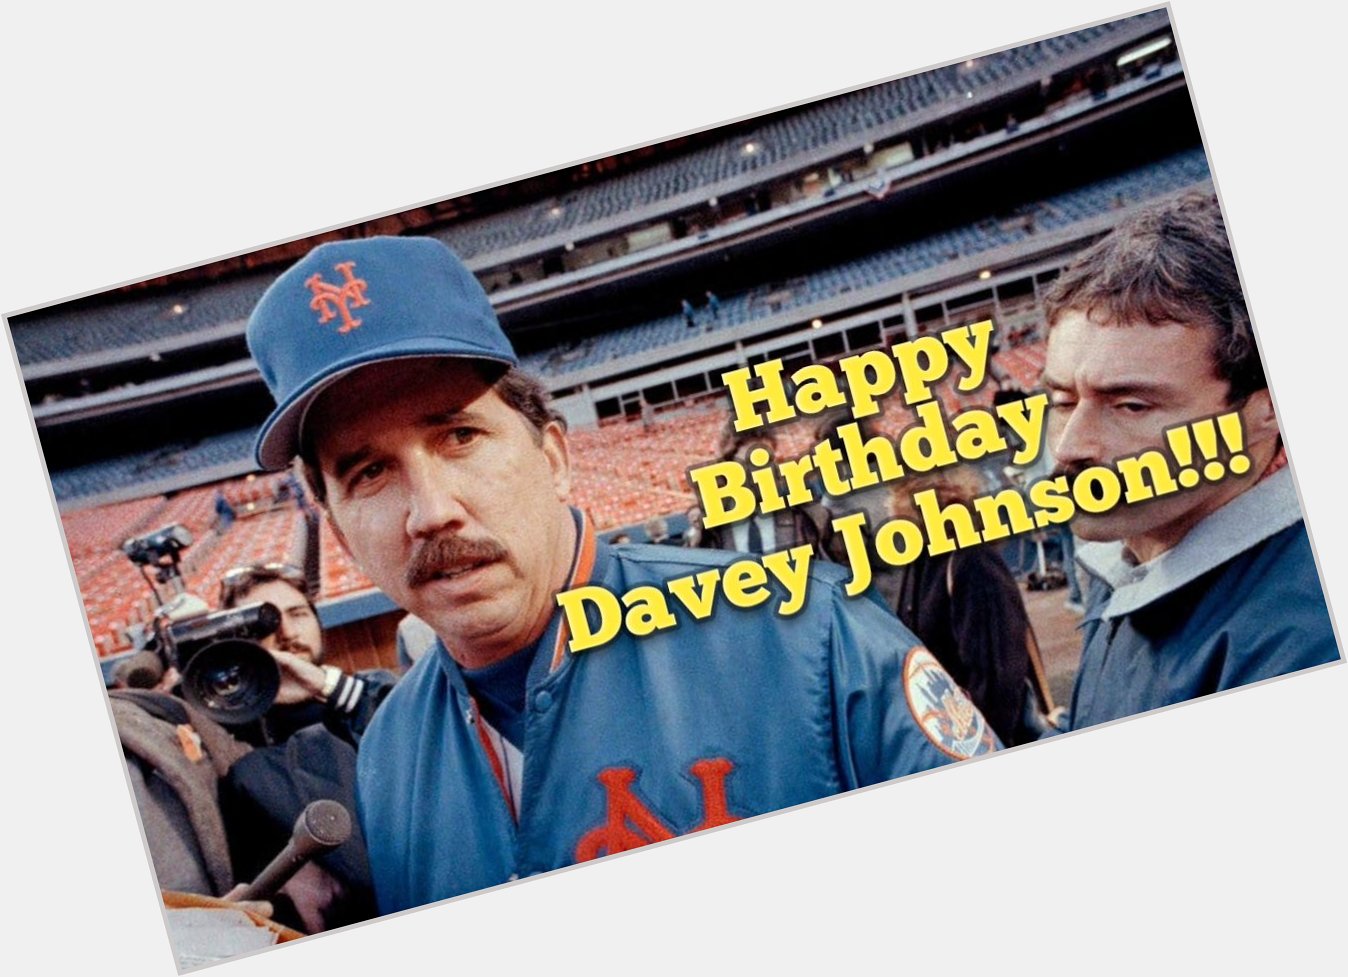 Happy Birthday Davey Johnson! 1986 champion manager.   